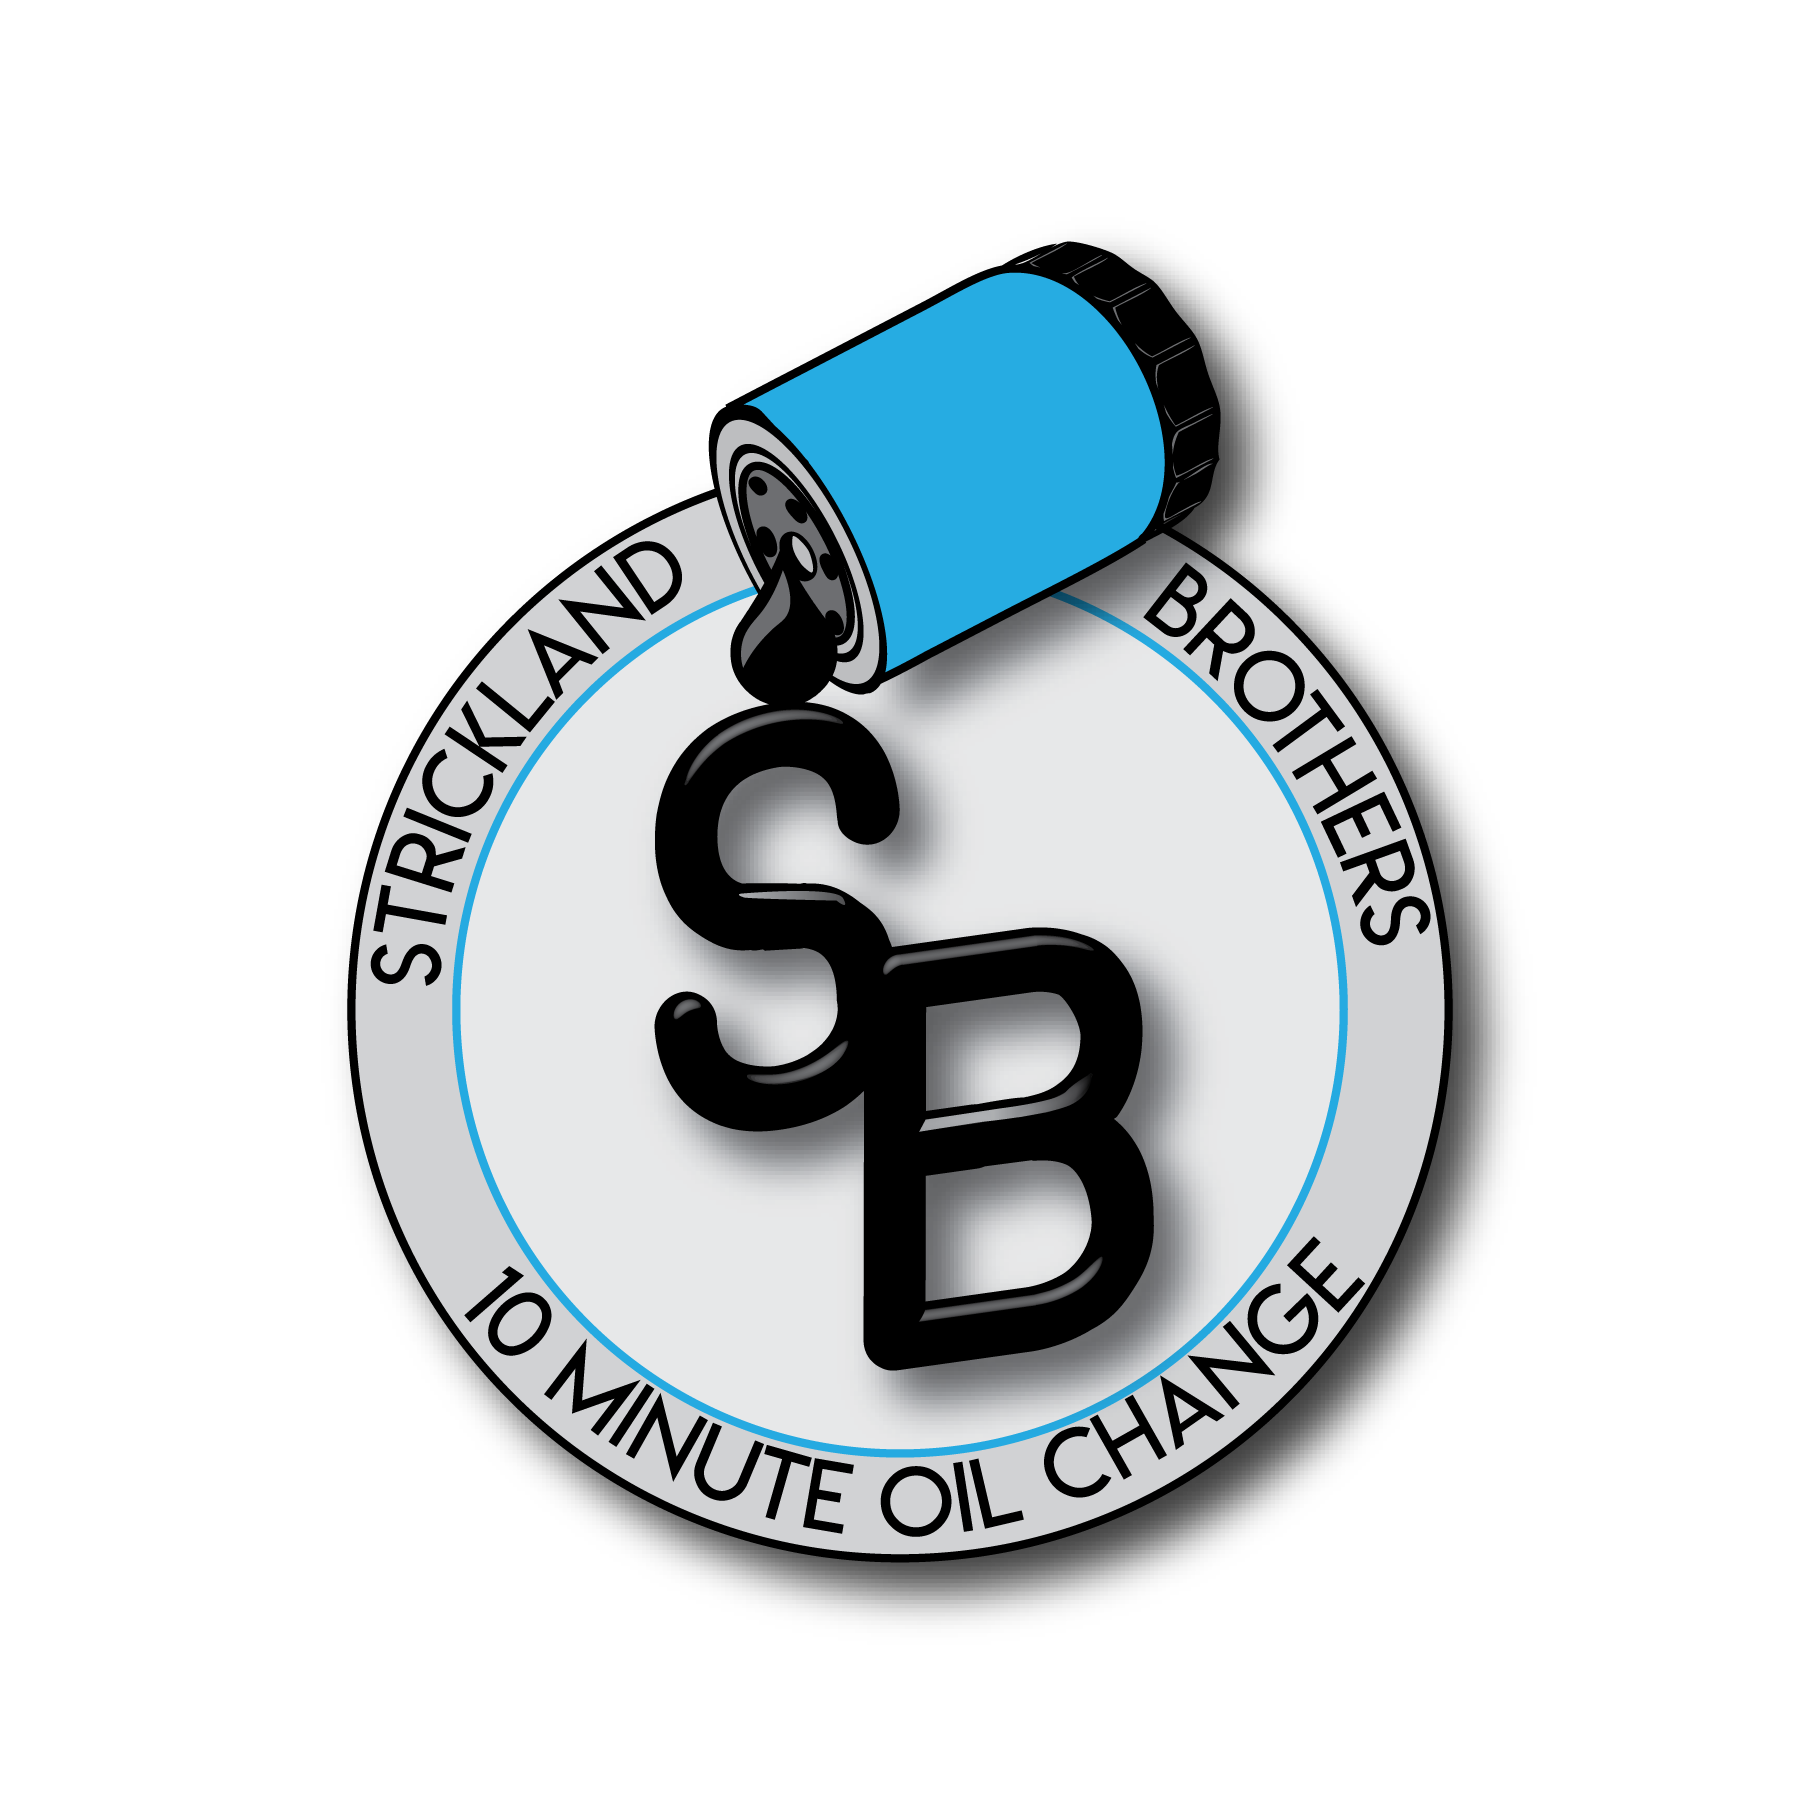 Strickland Brothers logo